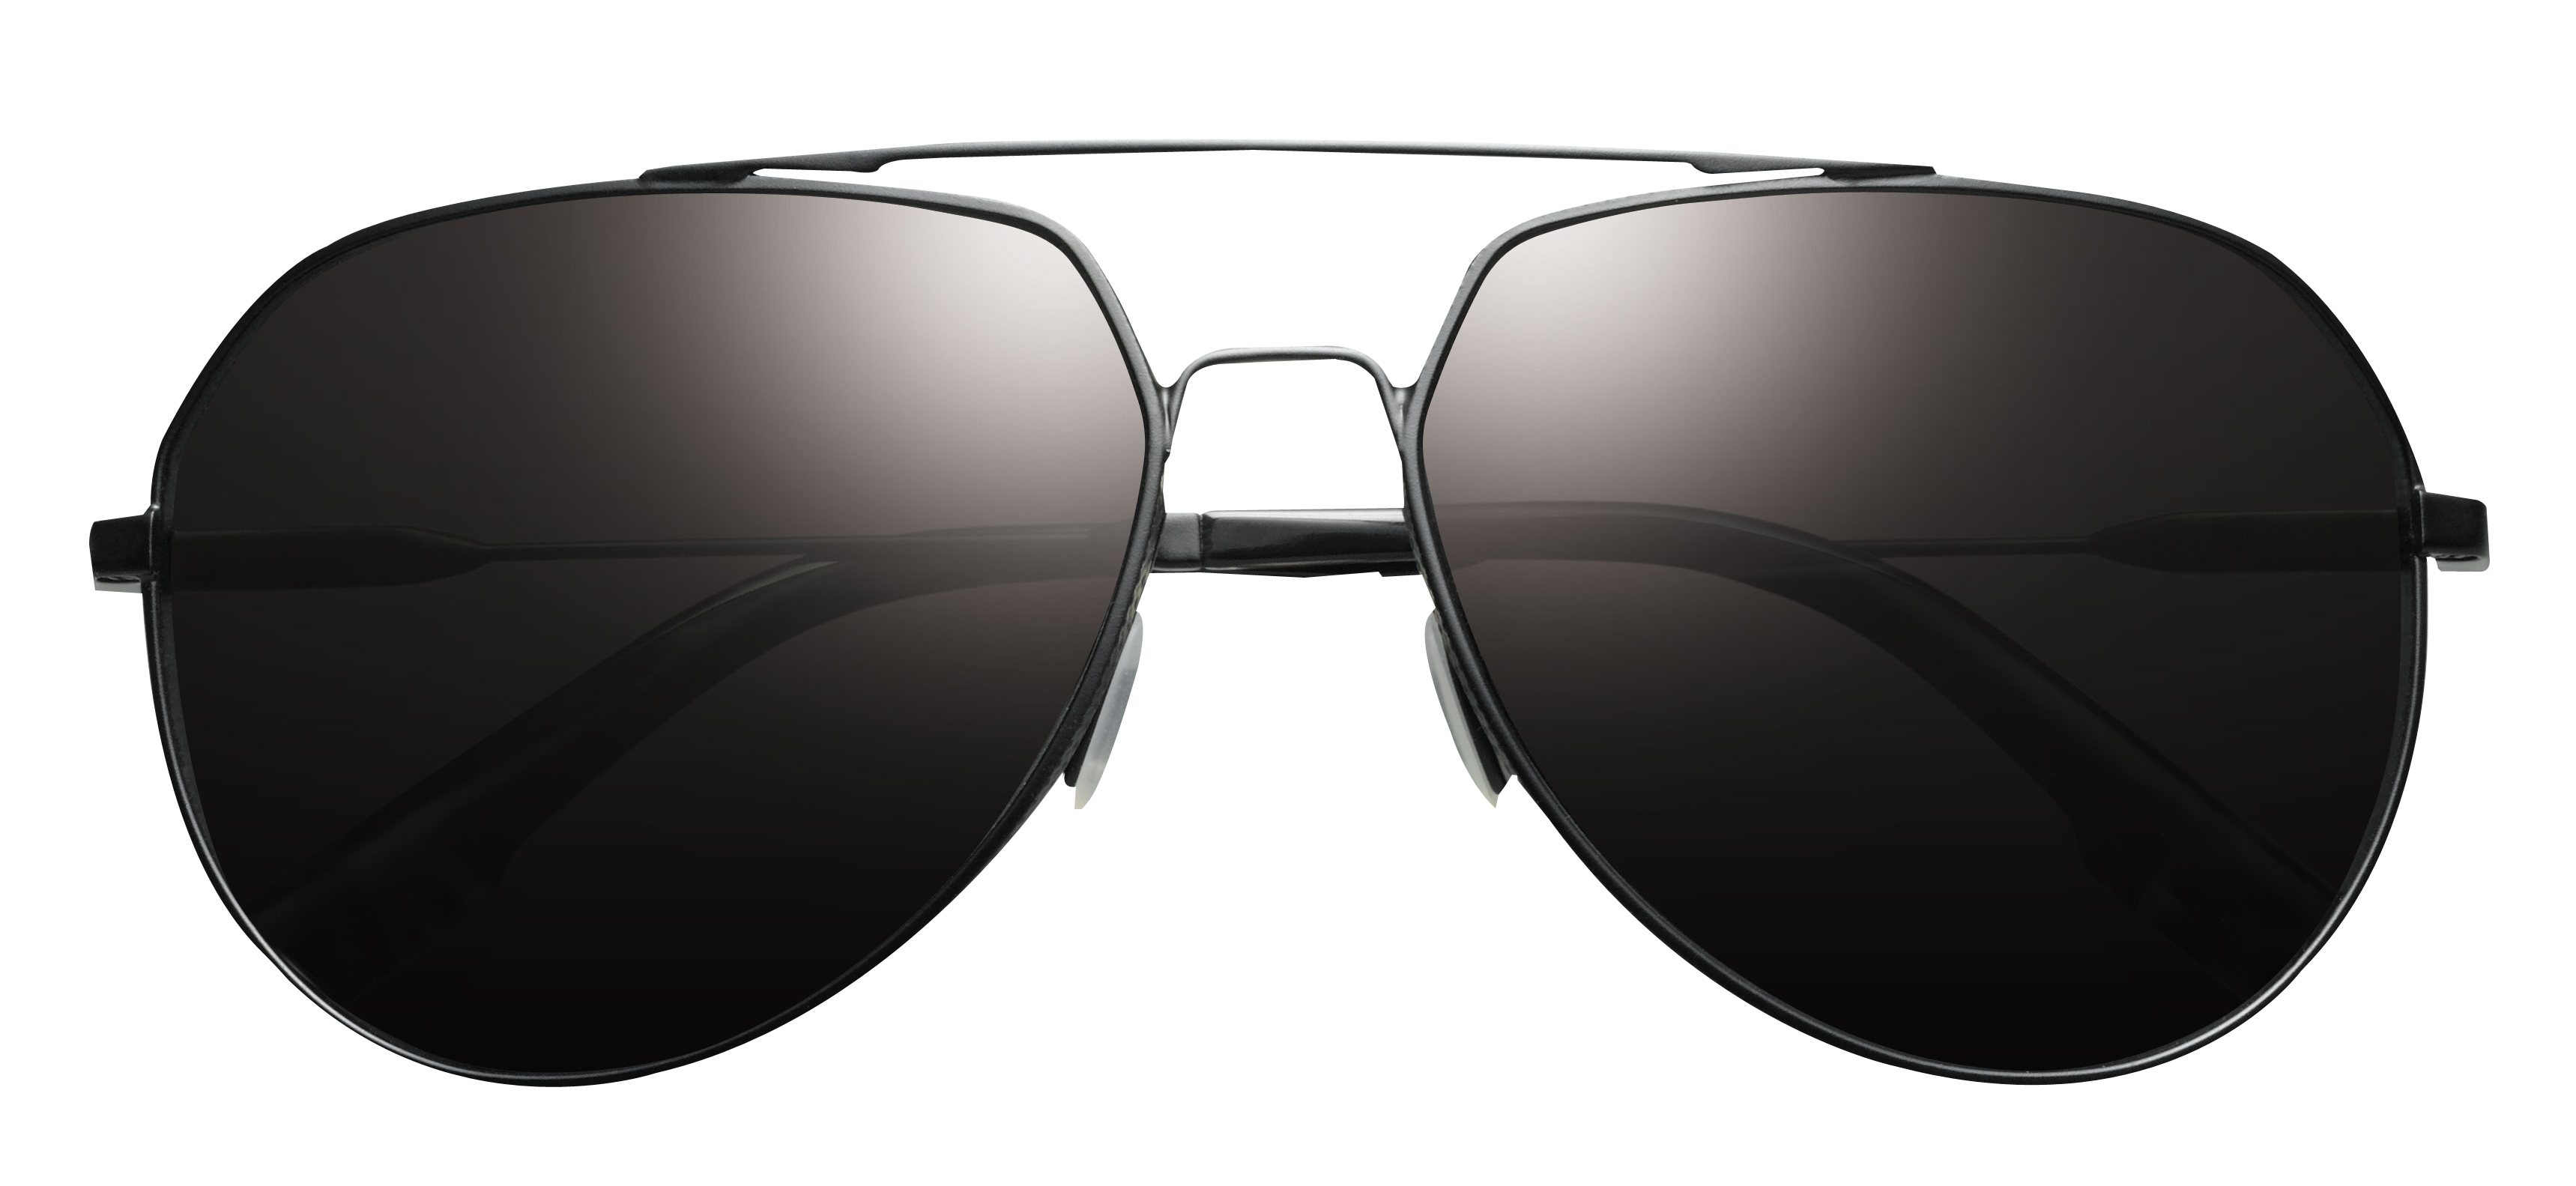 rayban transparent sunglasses man accessory png #10687